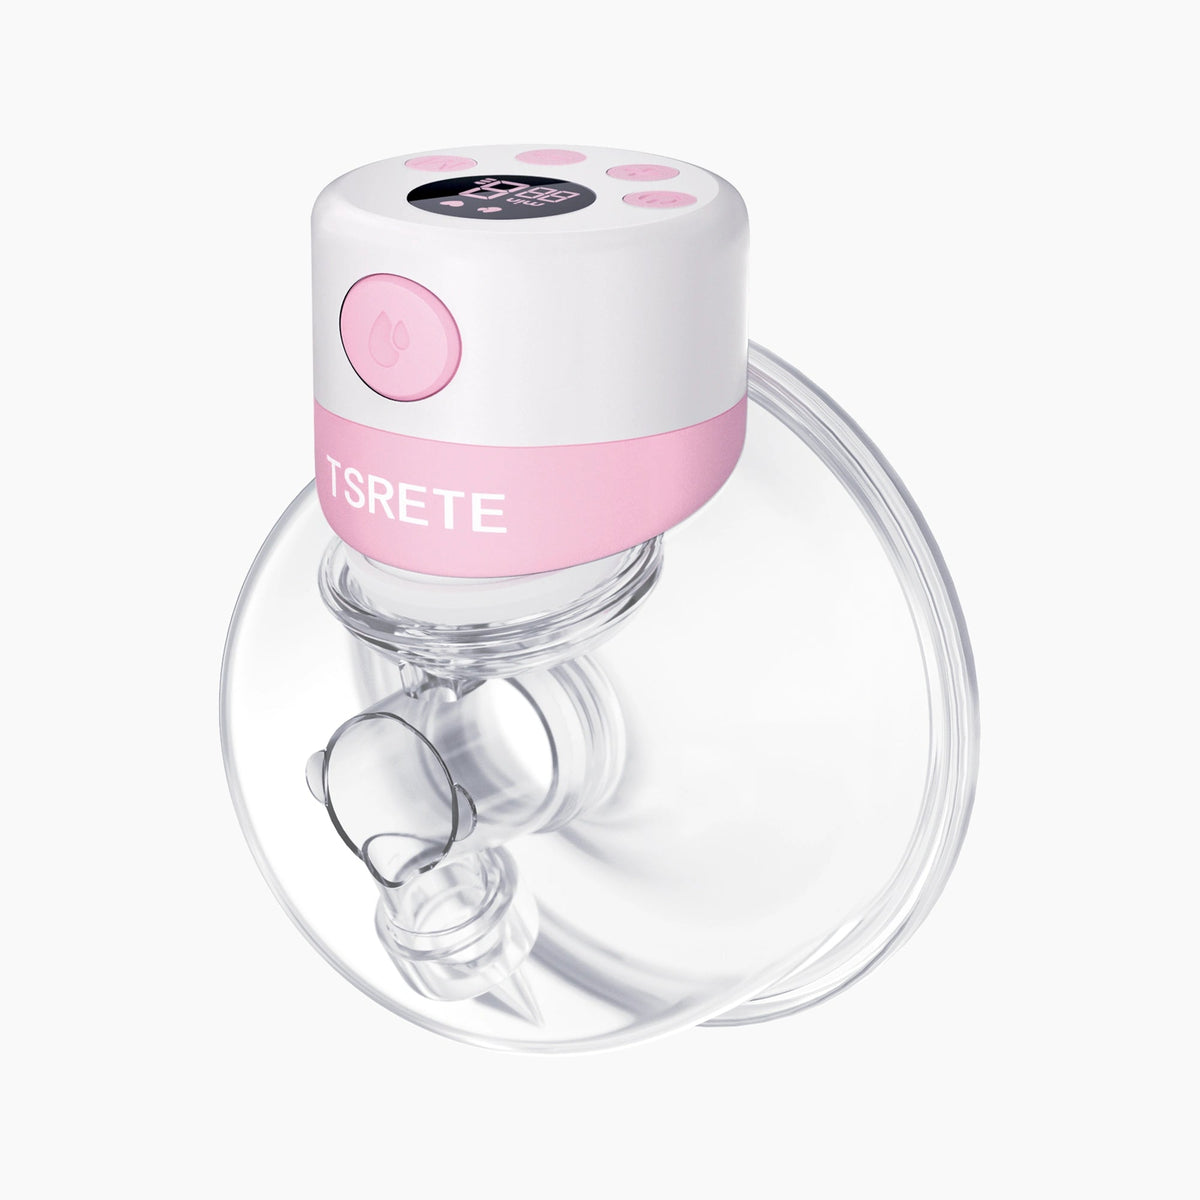 TSRETE S12 Wearable Electric Breast Pump